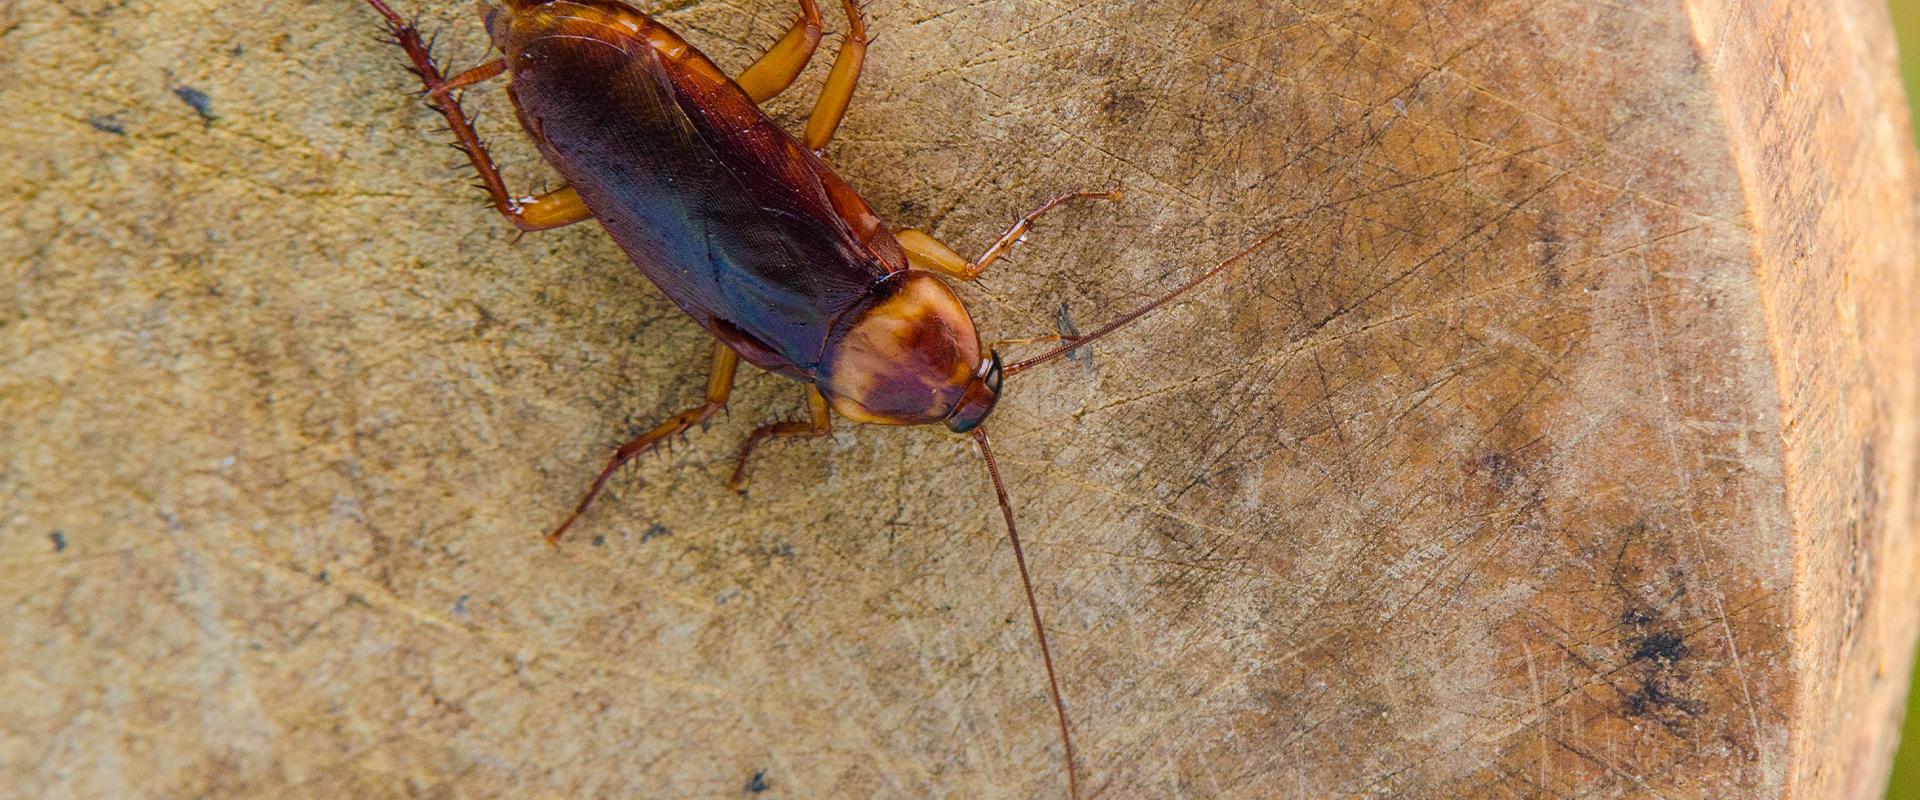 a cockroach on wood